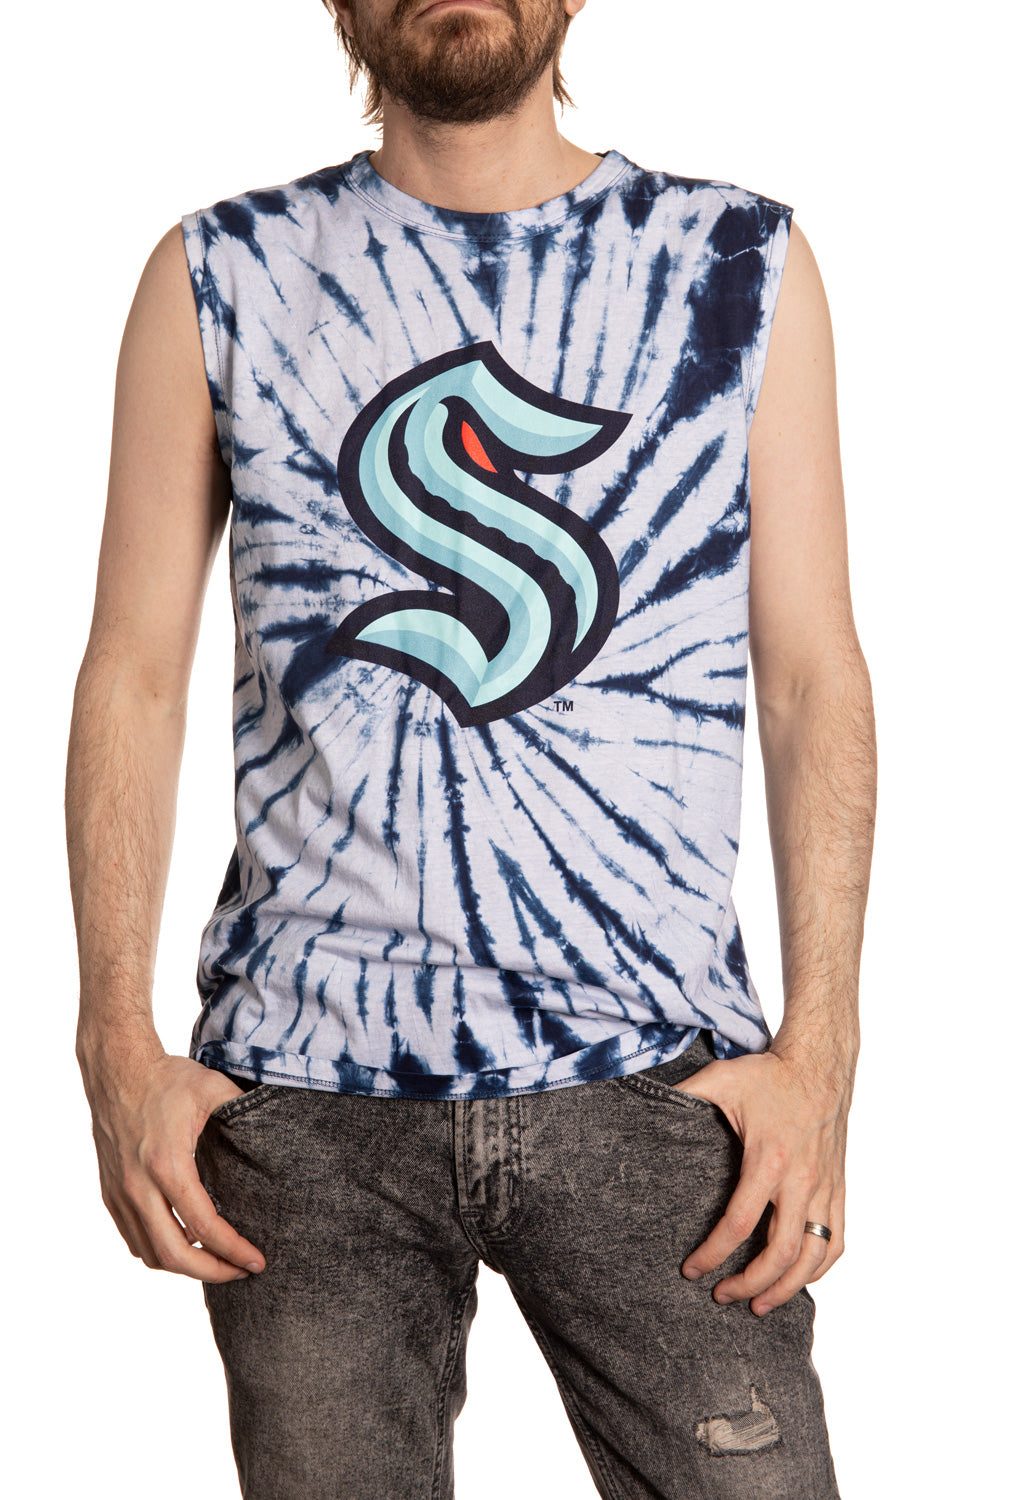 Seattle Kraken Spiral Tie Dye Sleeveless Shirt Front View